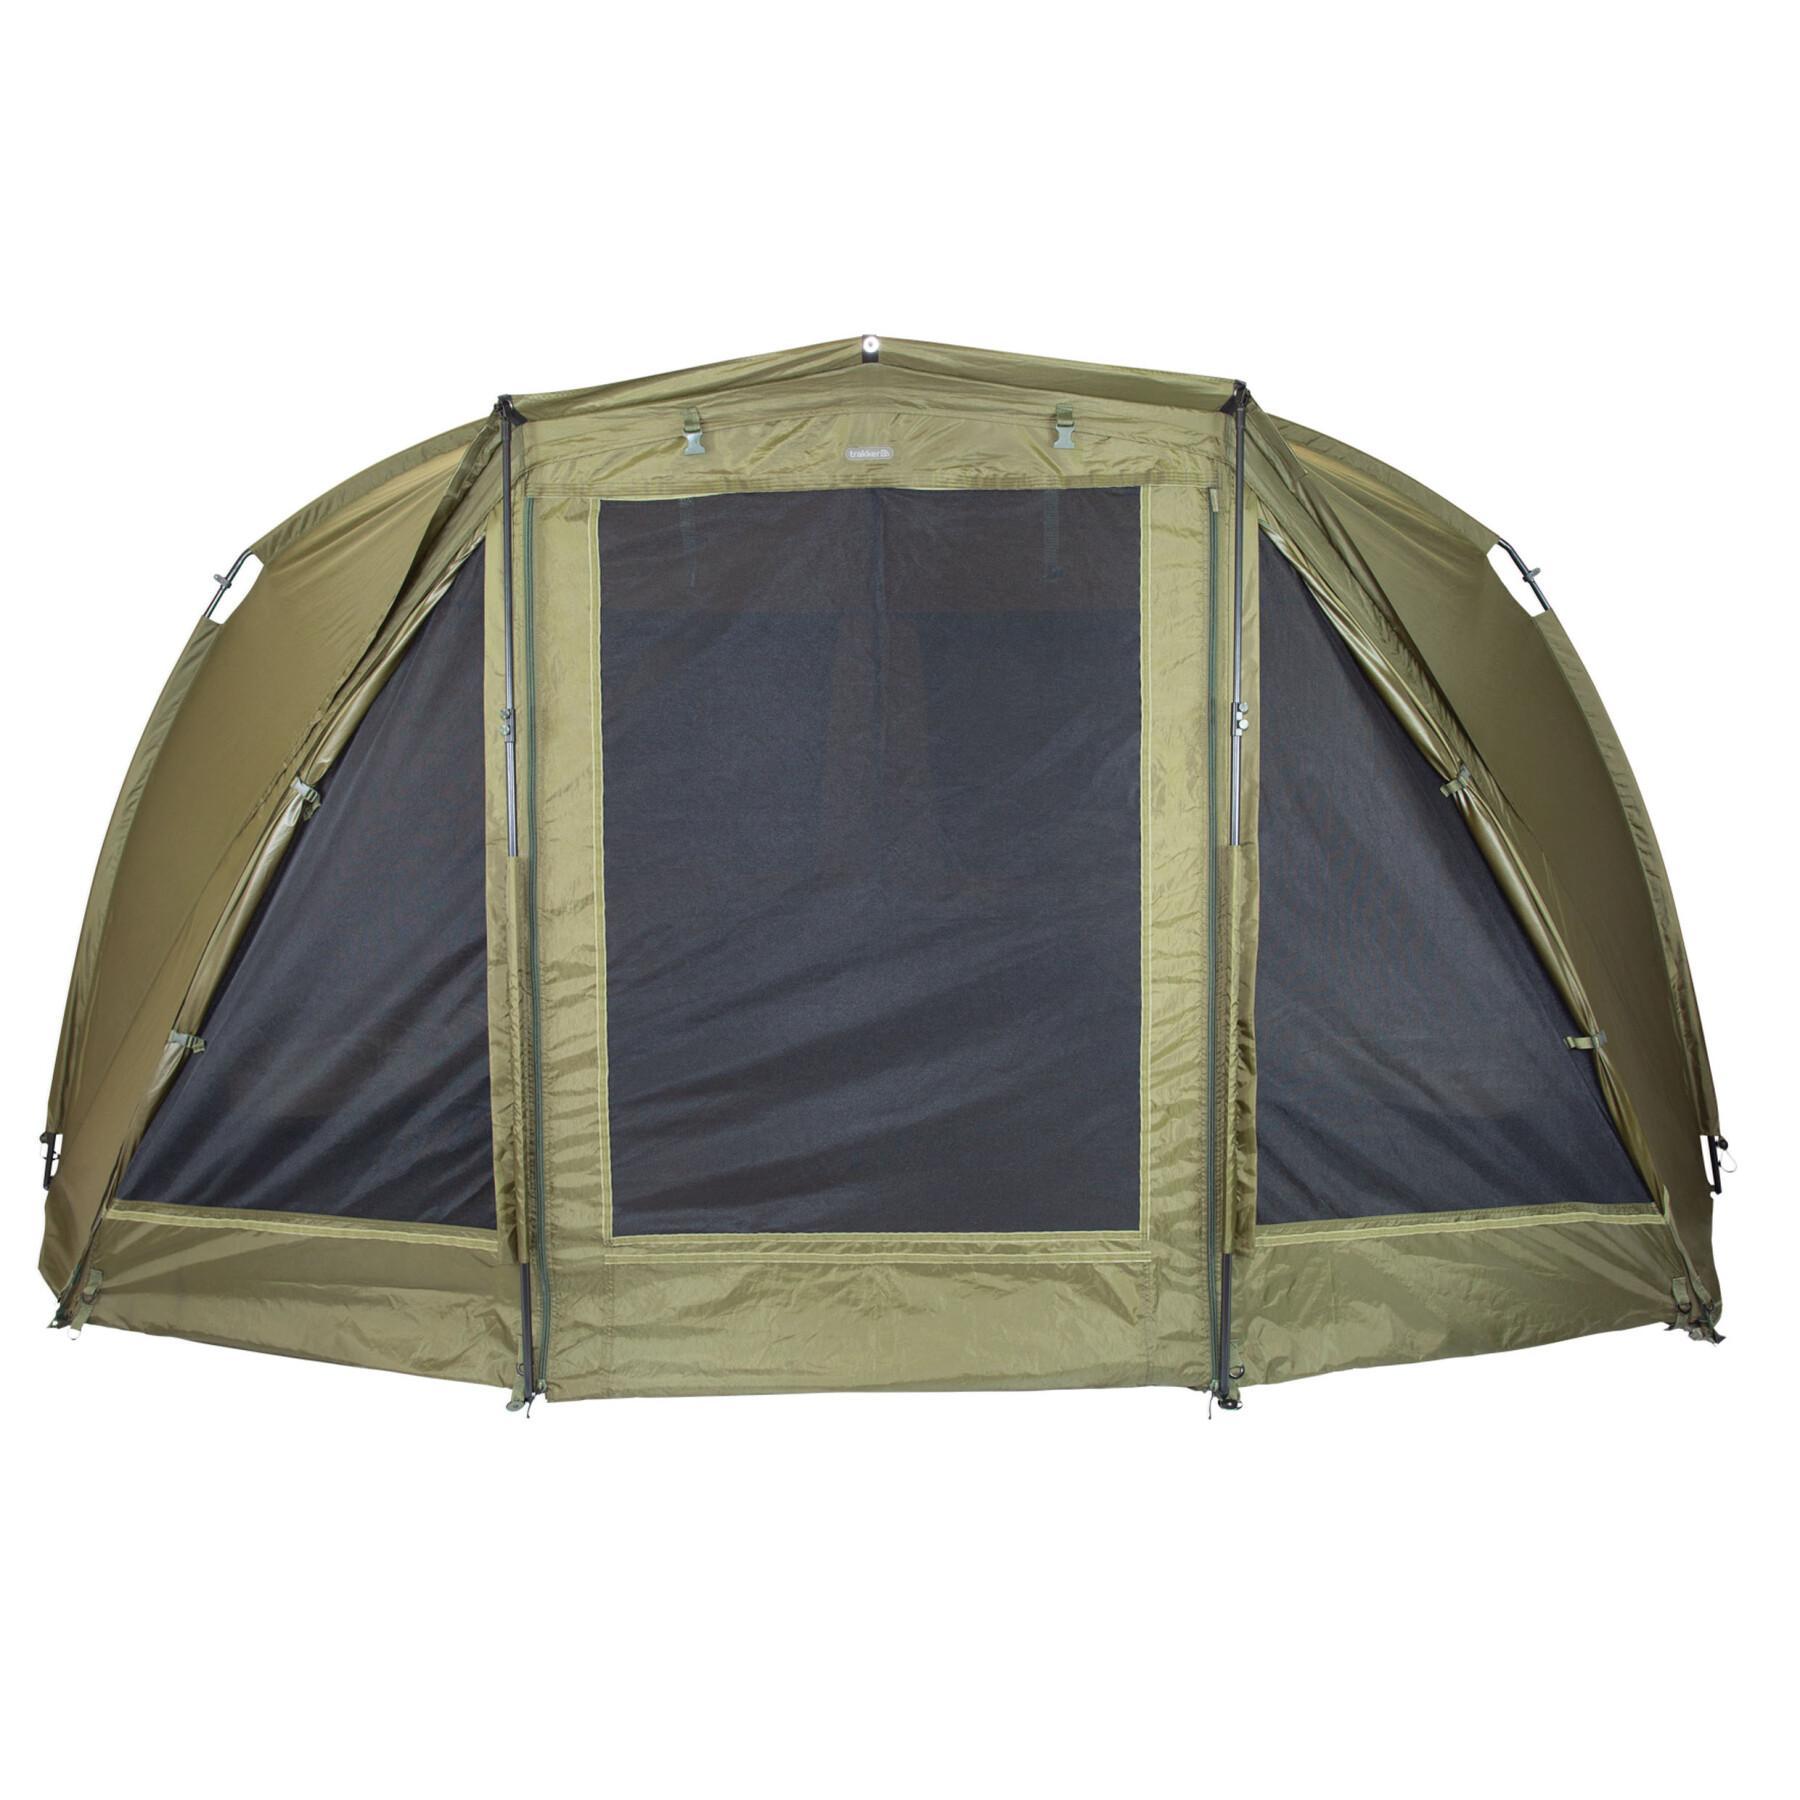 Tent Trakker tempest 200 shelter